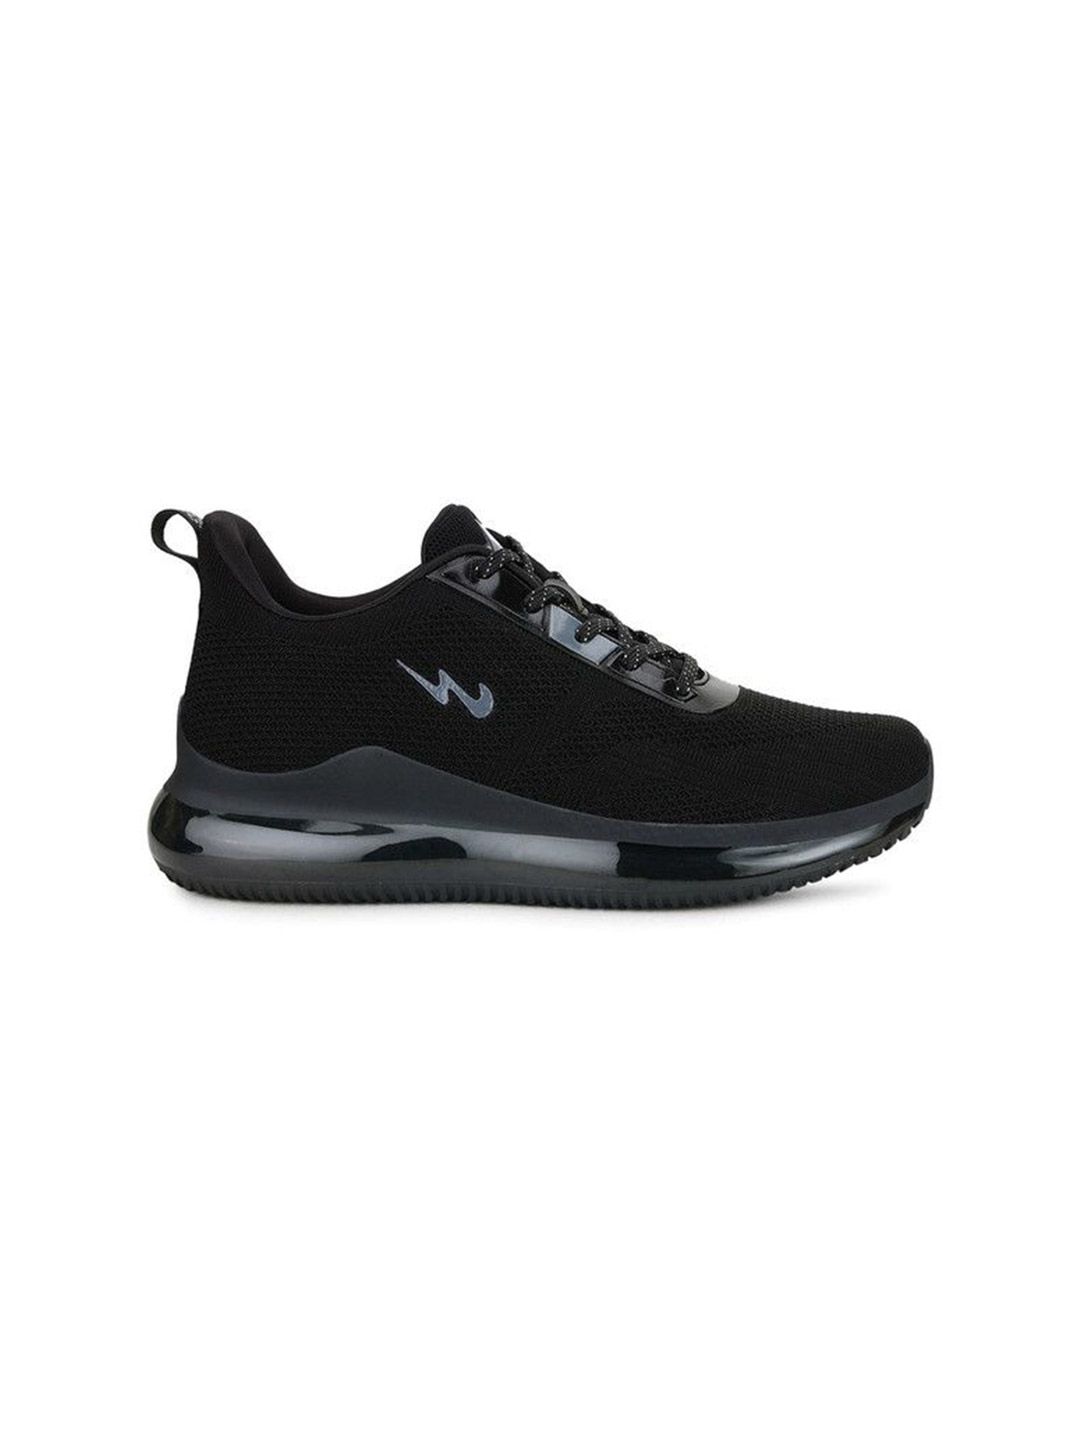 Buy Men Artemis Black Running Shoes From Fancode Shop.